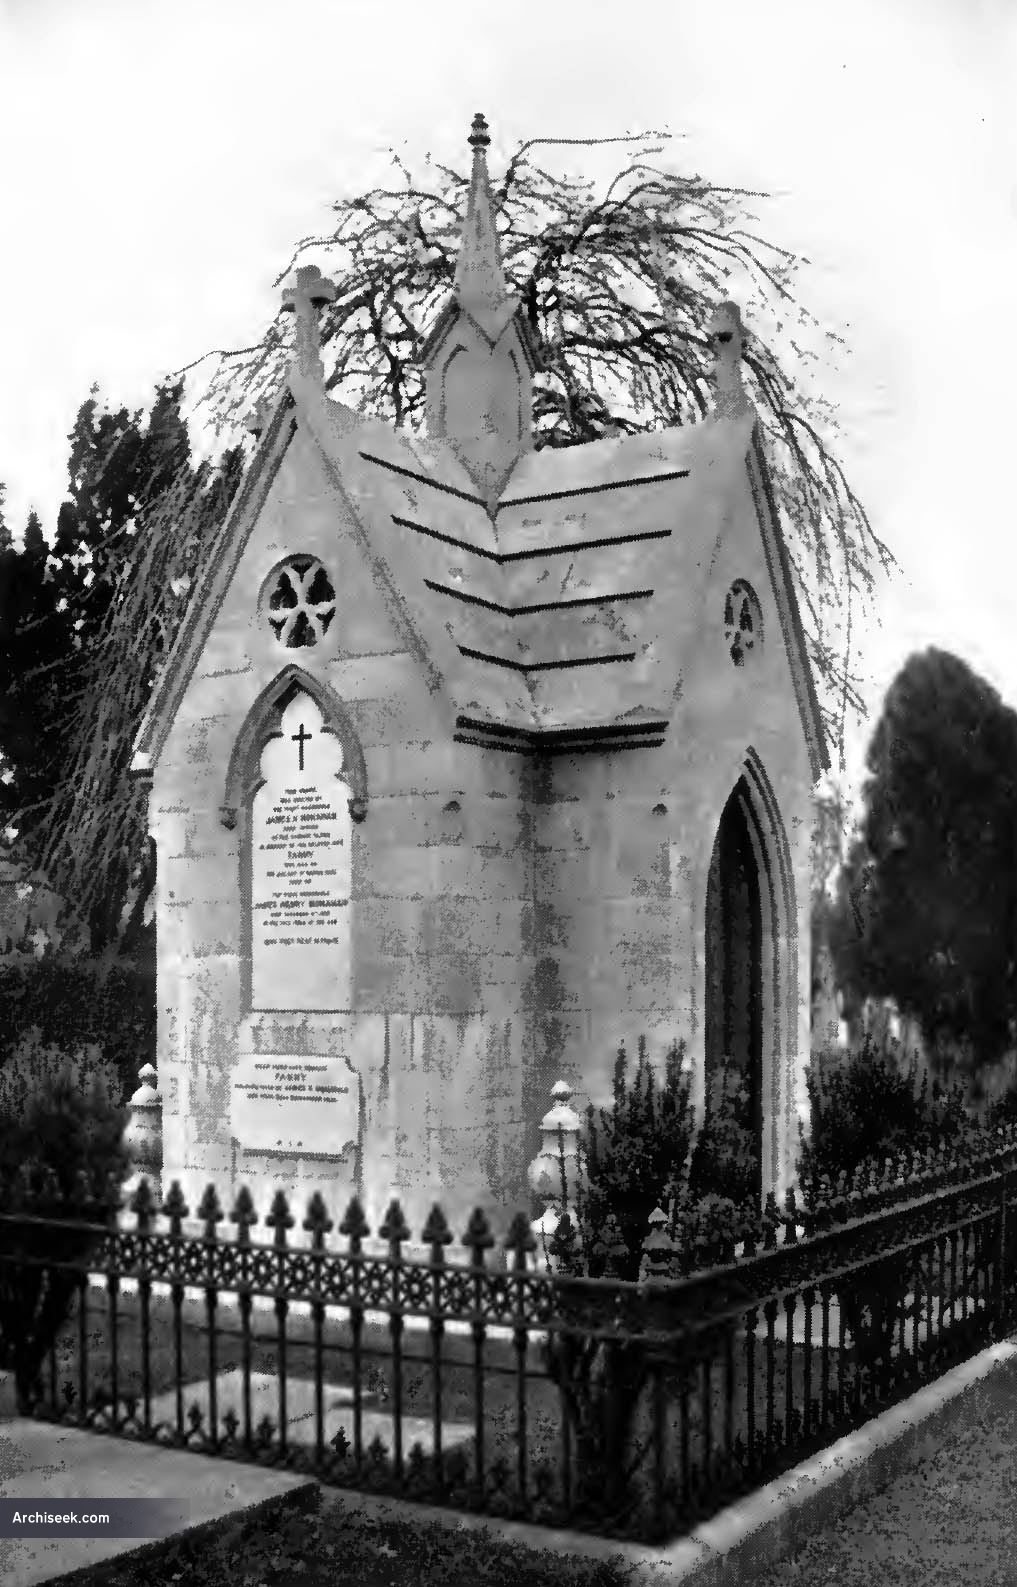 History of the Dublin Catholic cemeteries